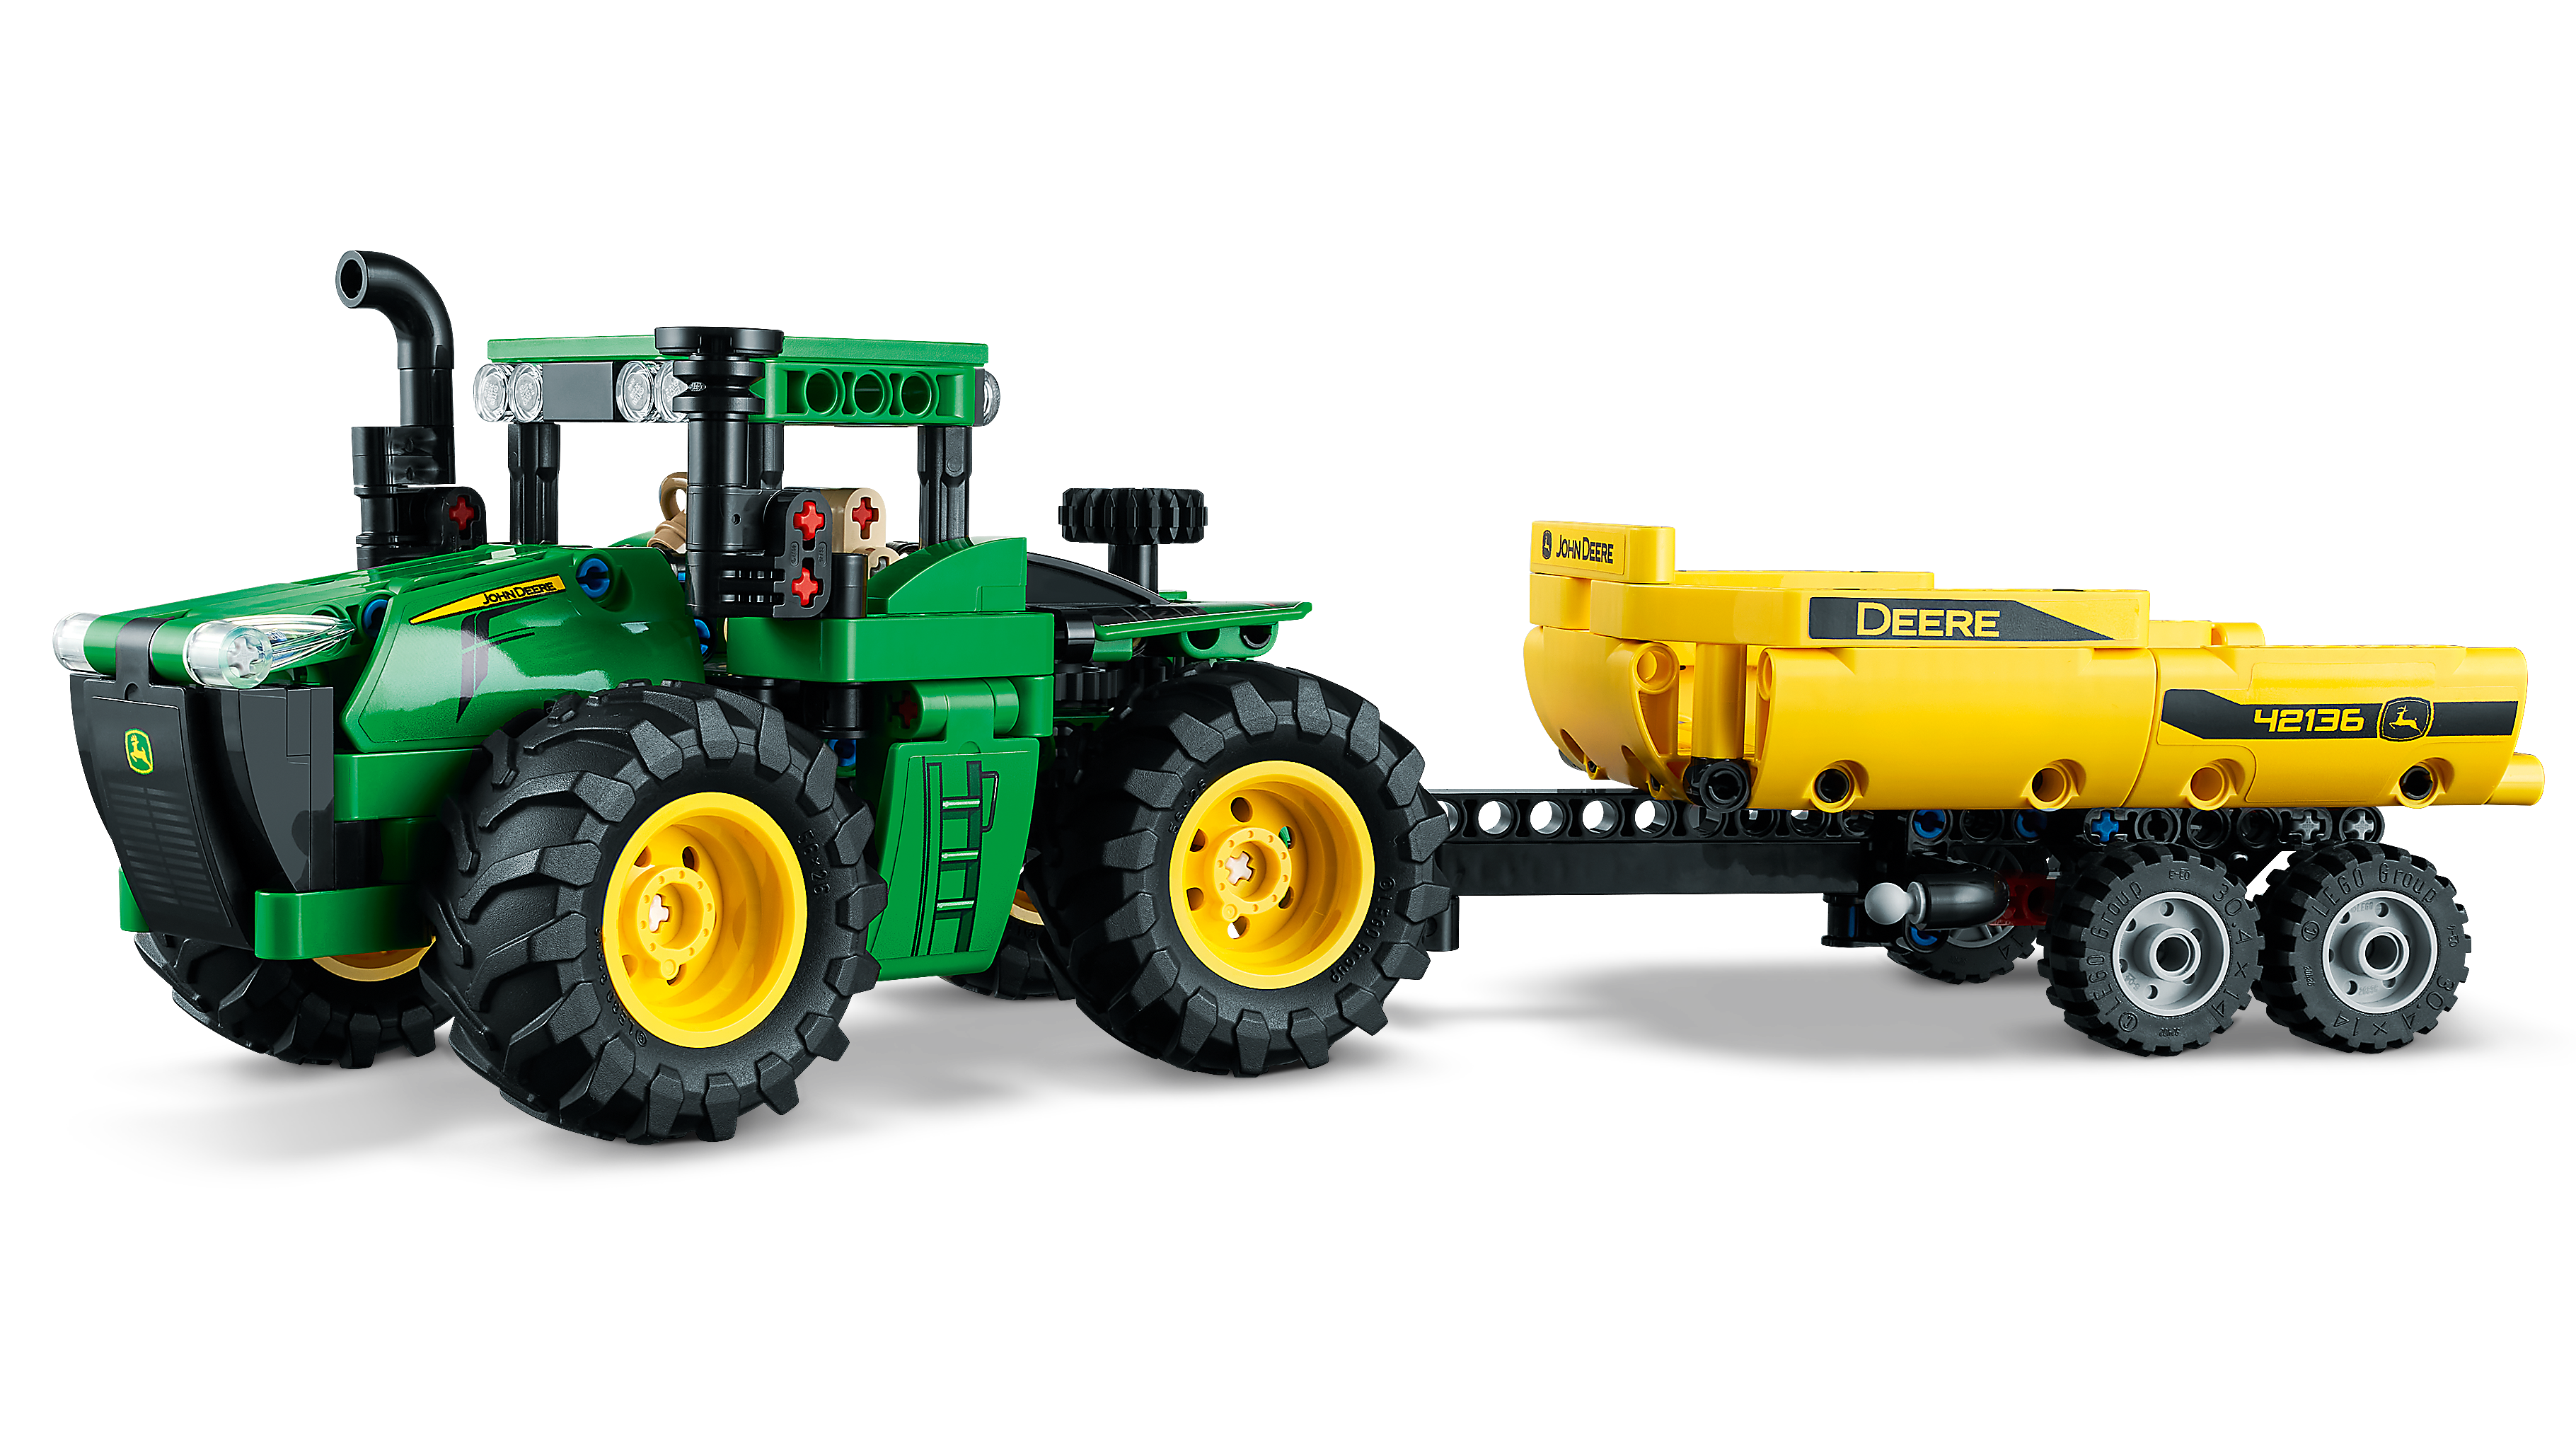 Recite Polar skolde John Deere 9620R 4WD Tractor 42136 - LEGO® Technic Sets - LEGO.com for kids